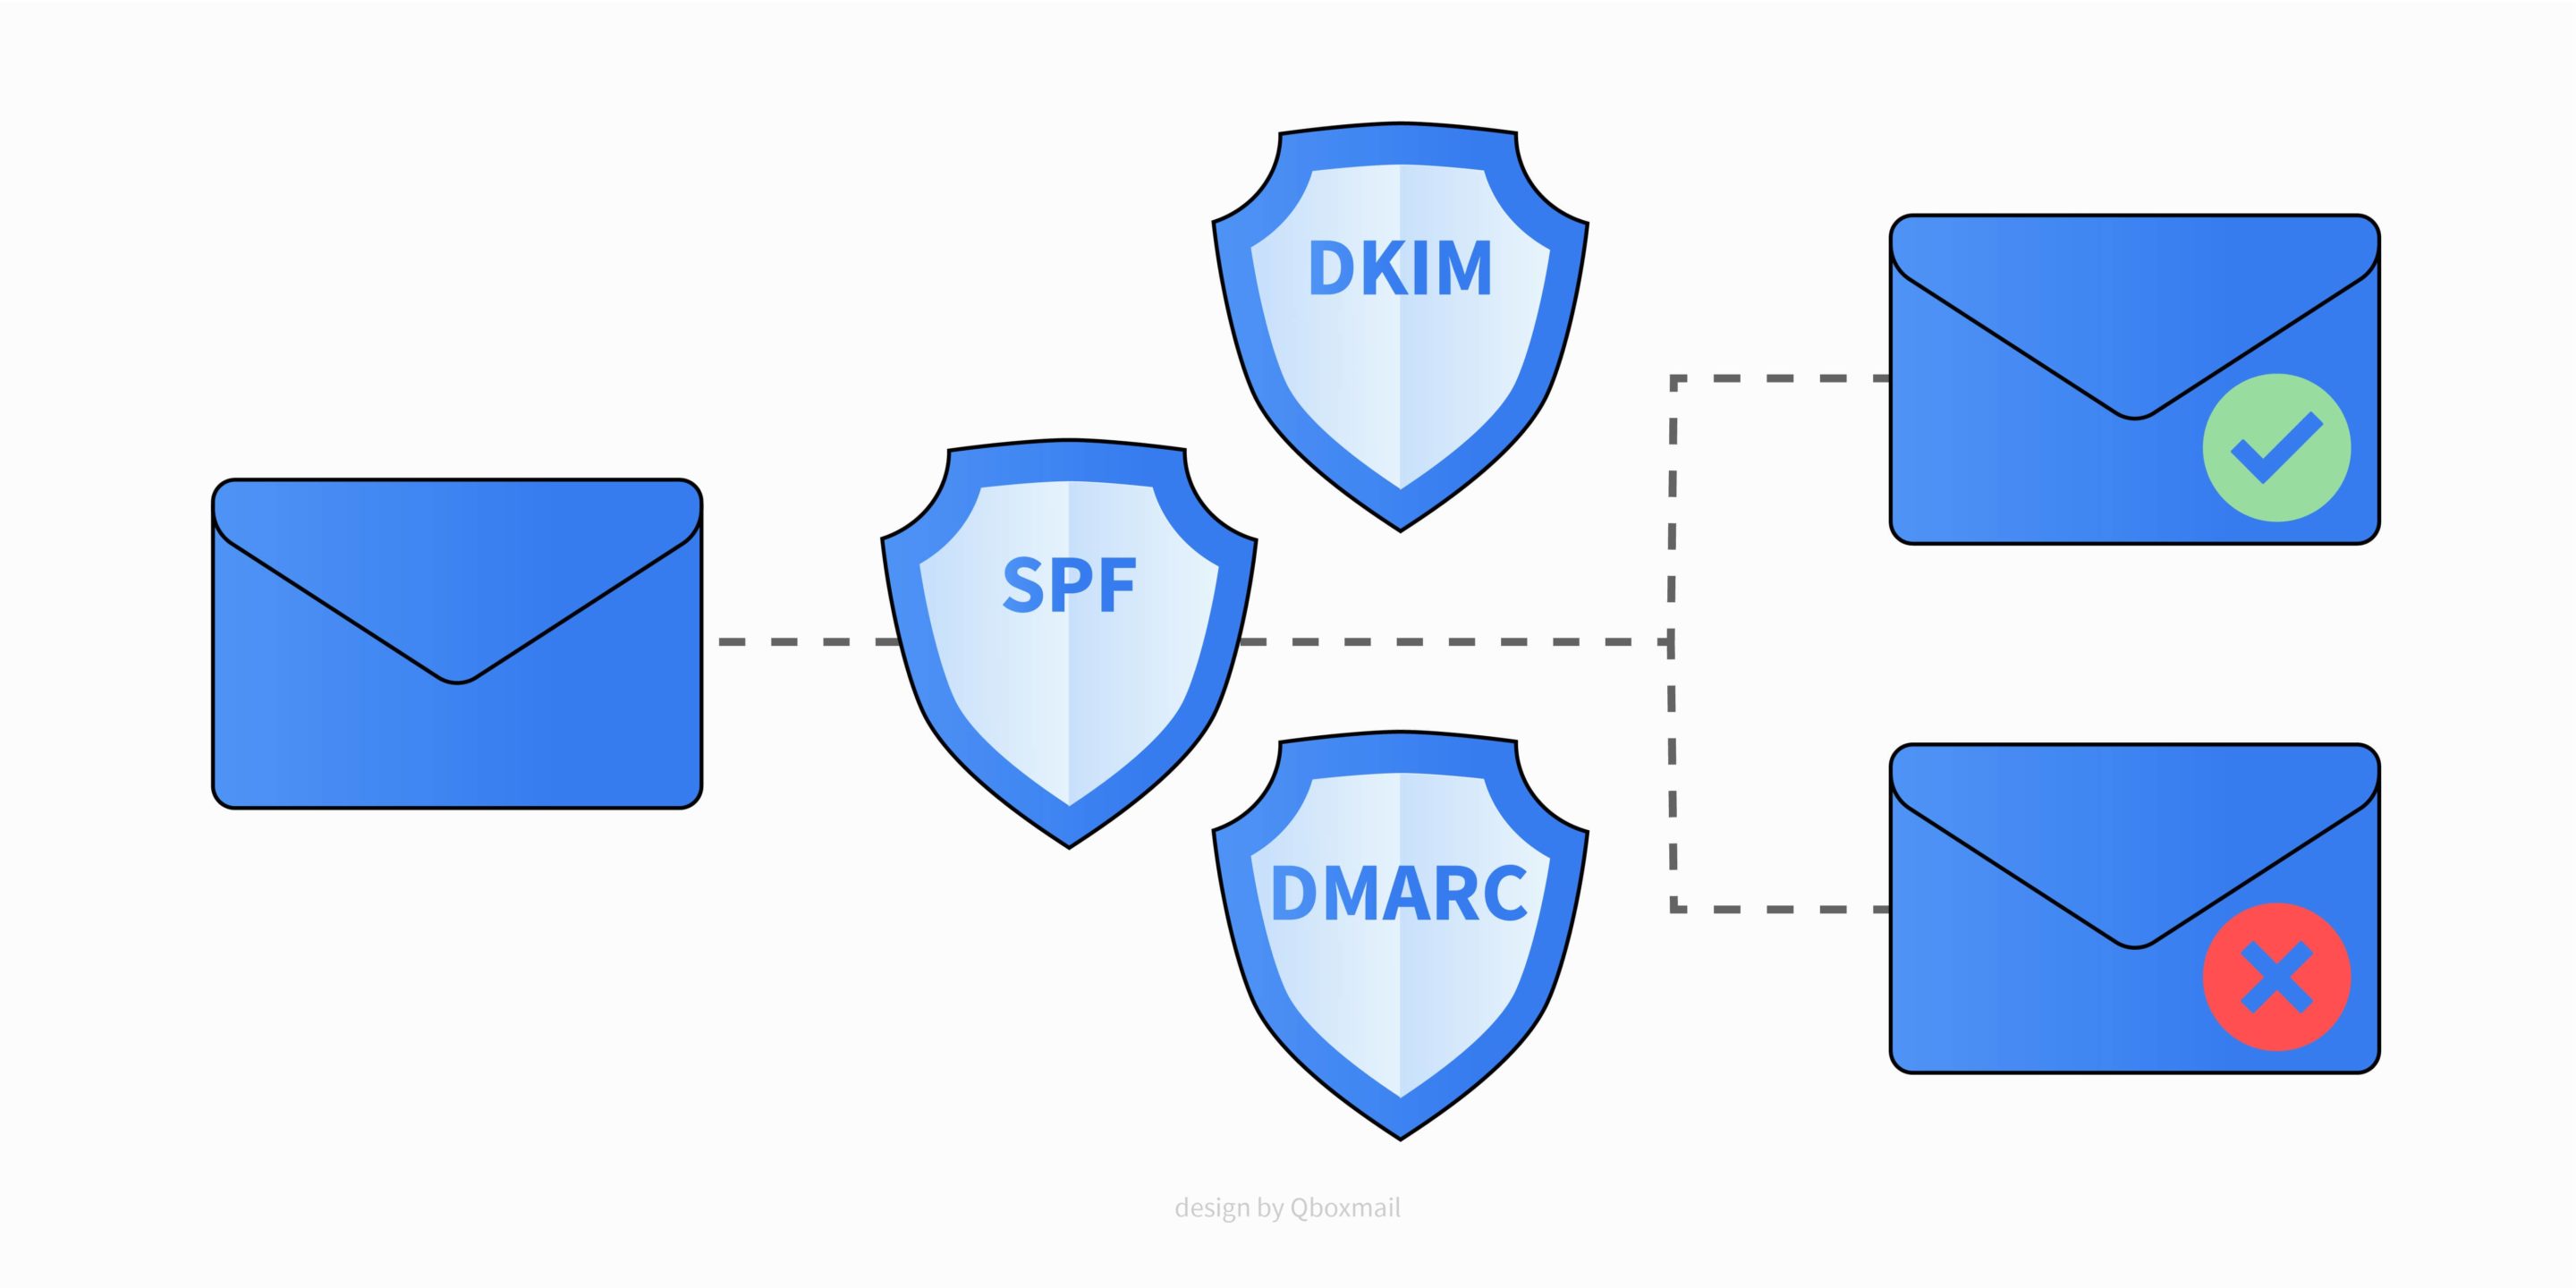 SPF-DKIM-DMARC email scan